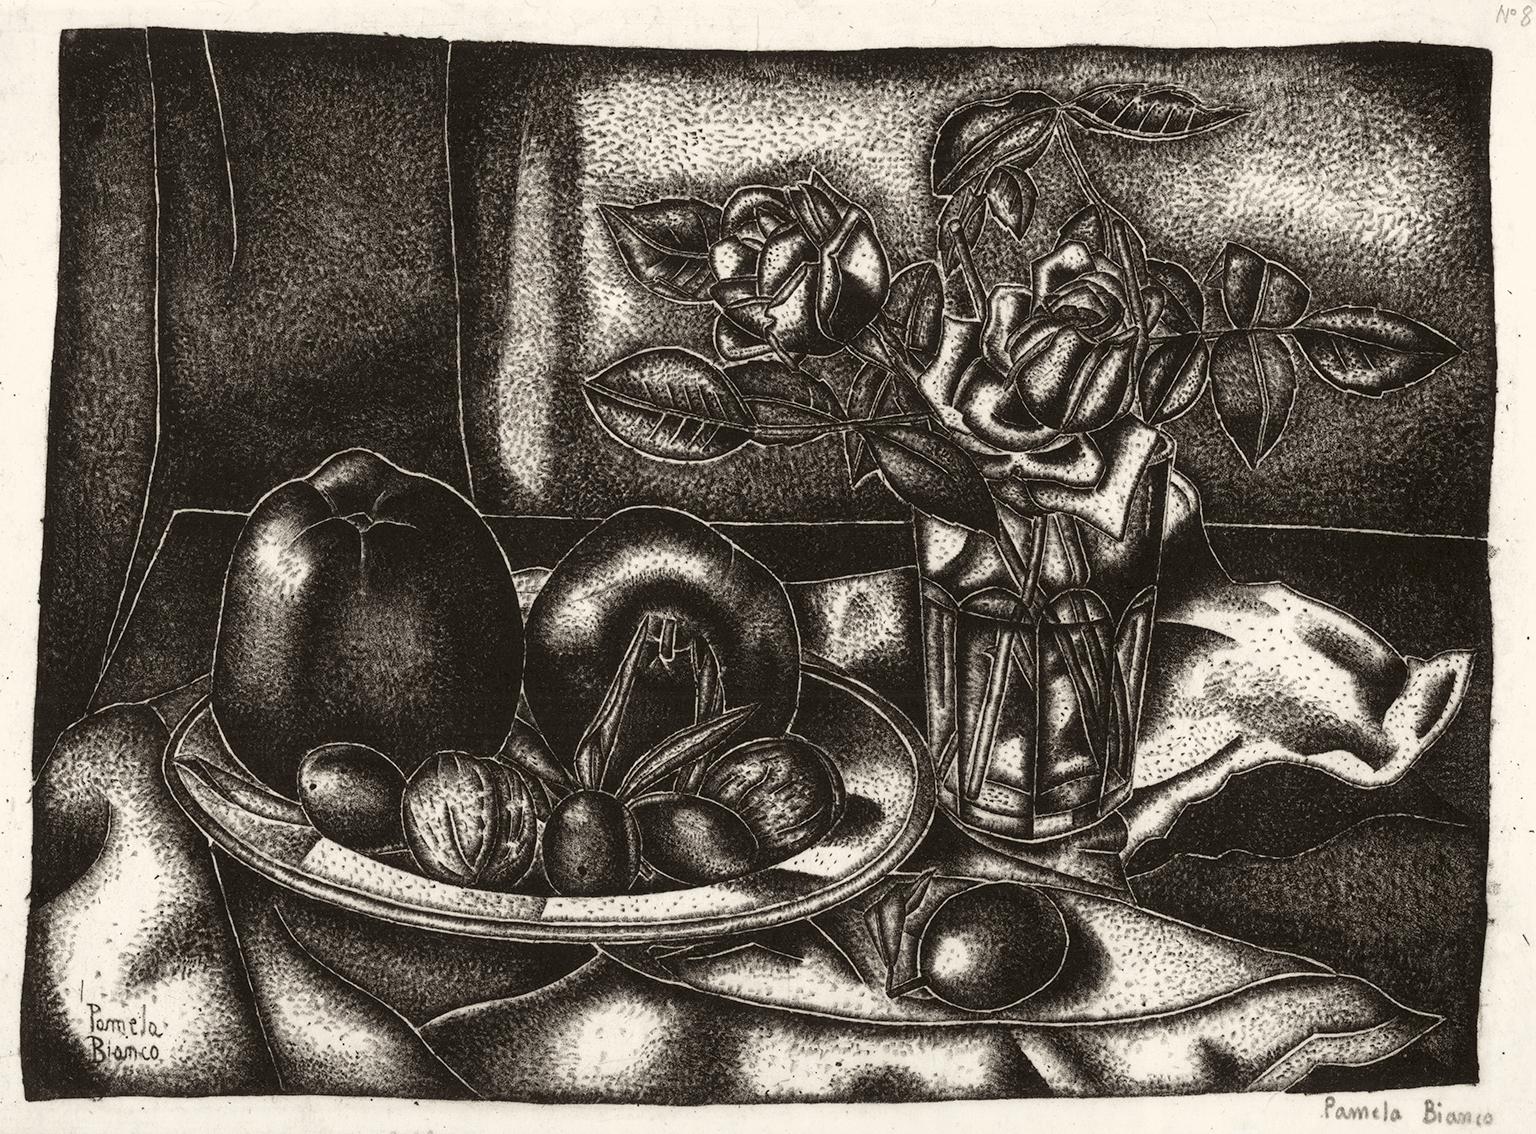 Pamela Bianco Figurative Print - 'Fruit Piece' — 1920's American Modernism